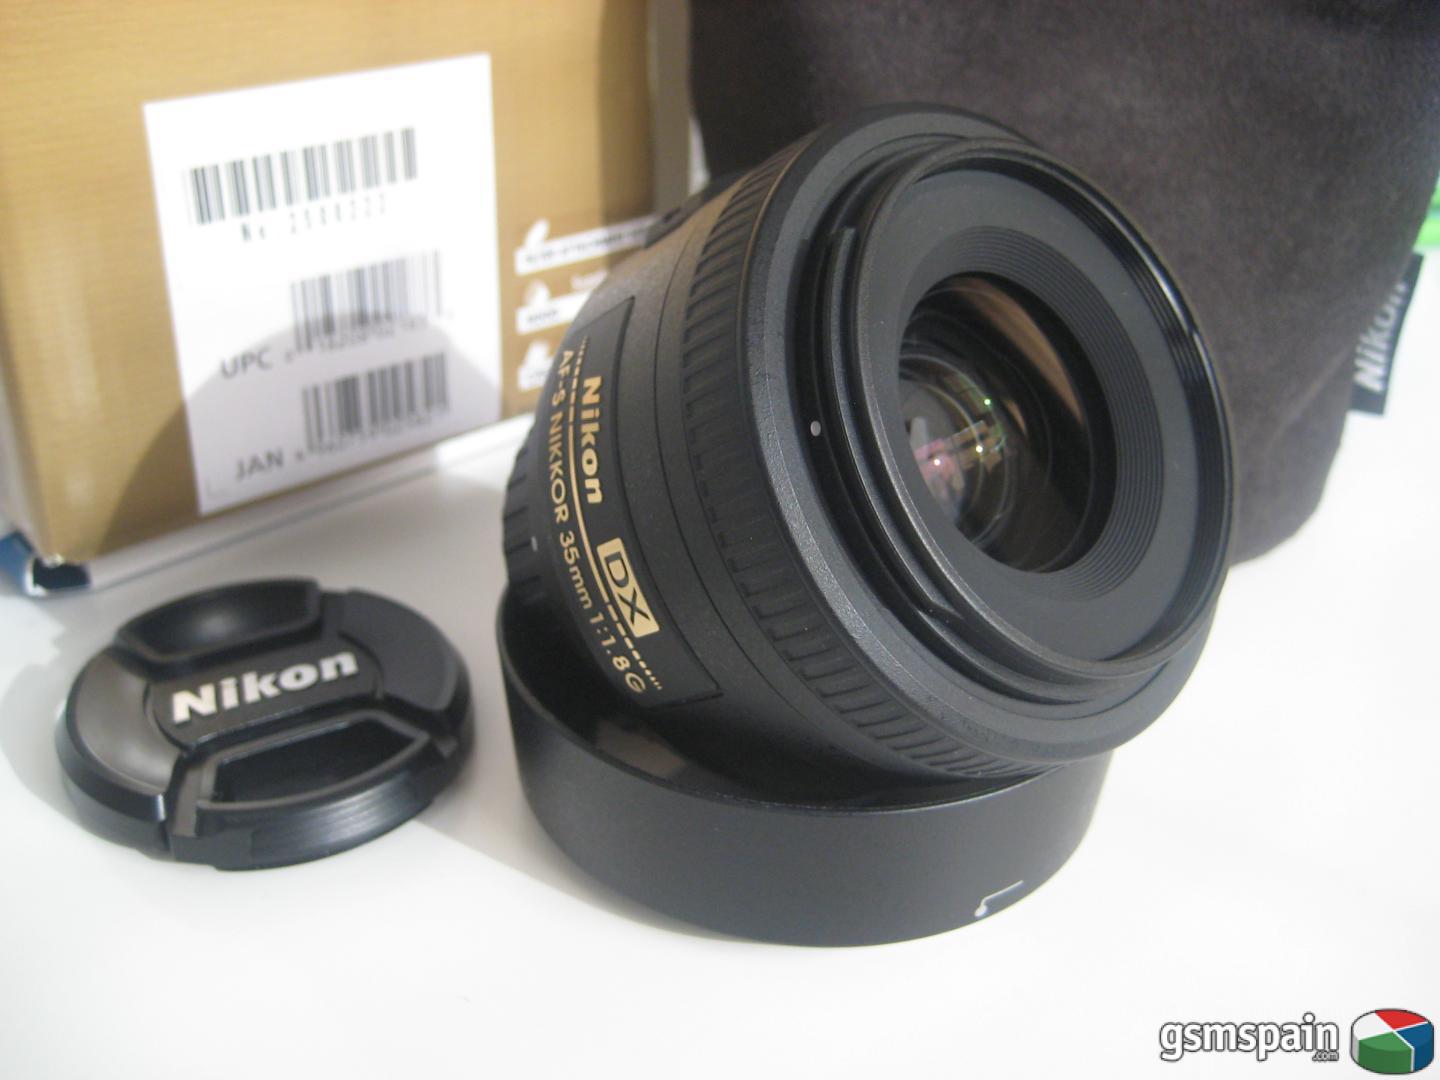 [VENDO] Nikon d5000 + objetivos + extras Nikon d5000 + objetivos + extras